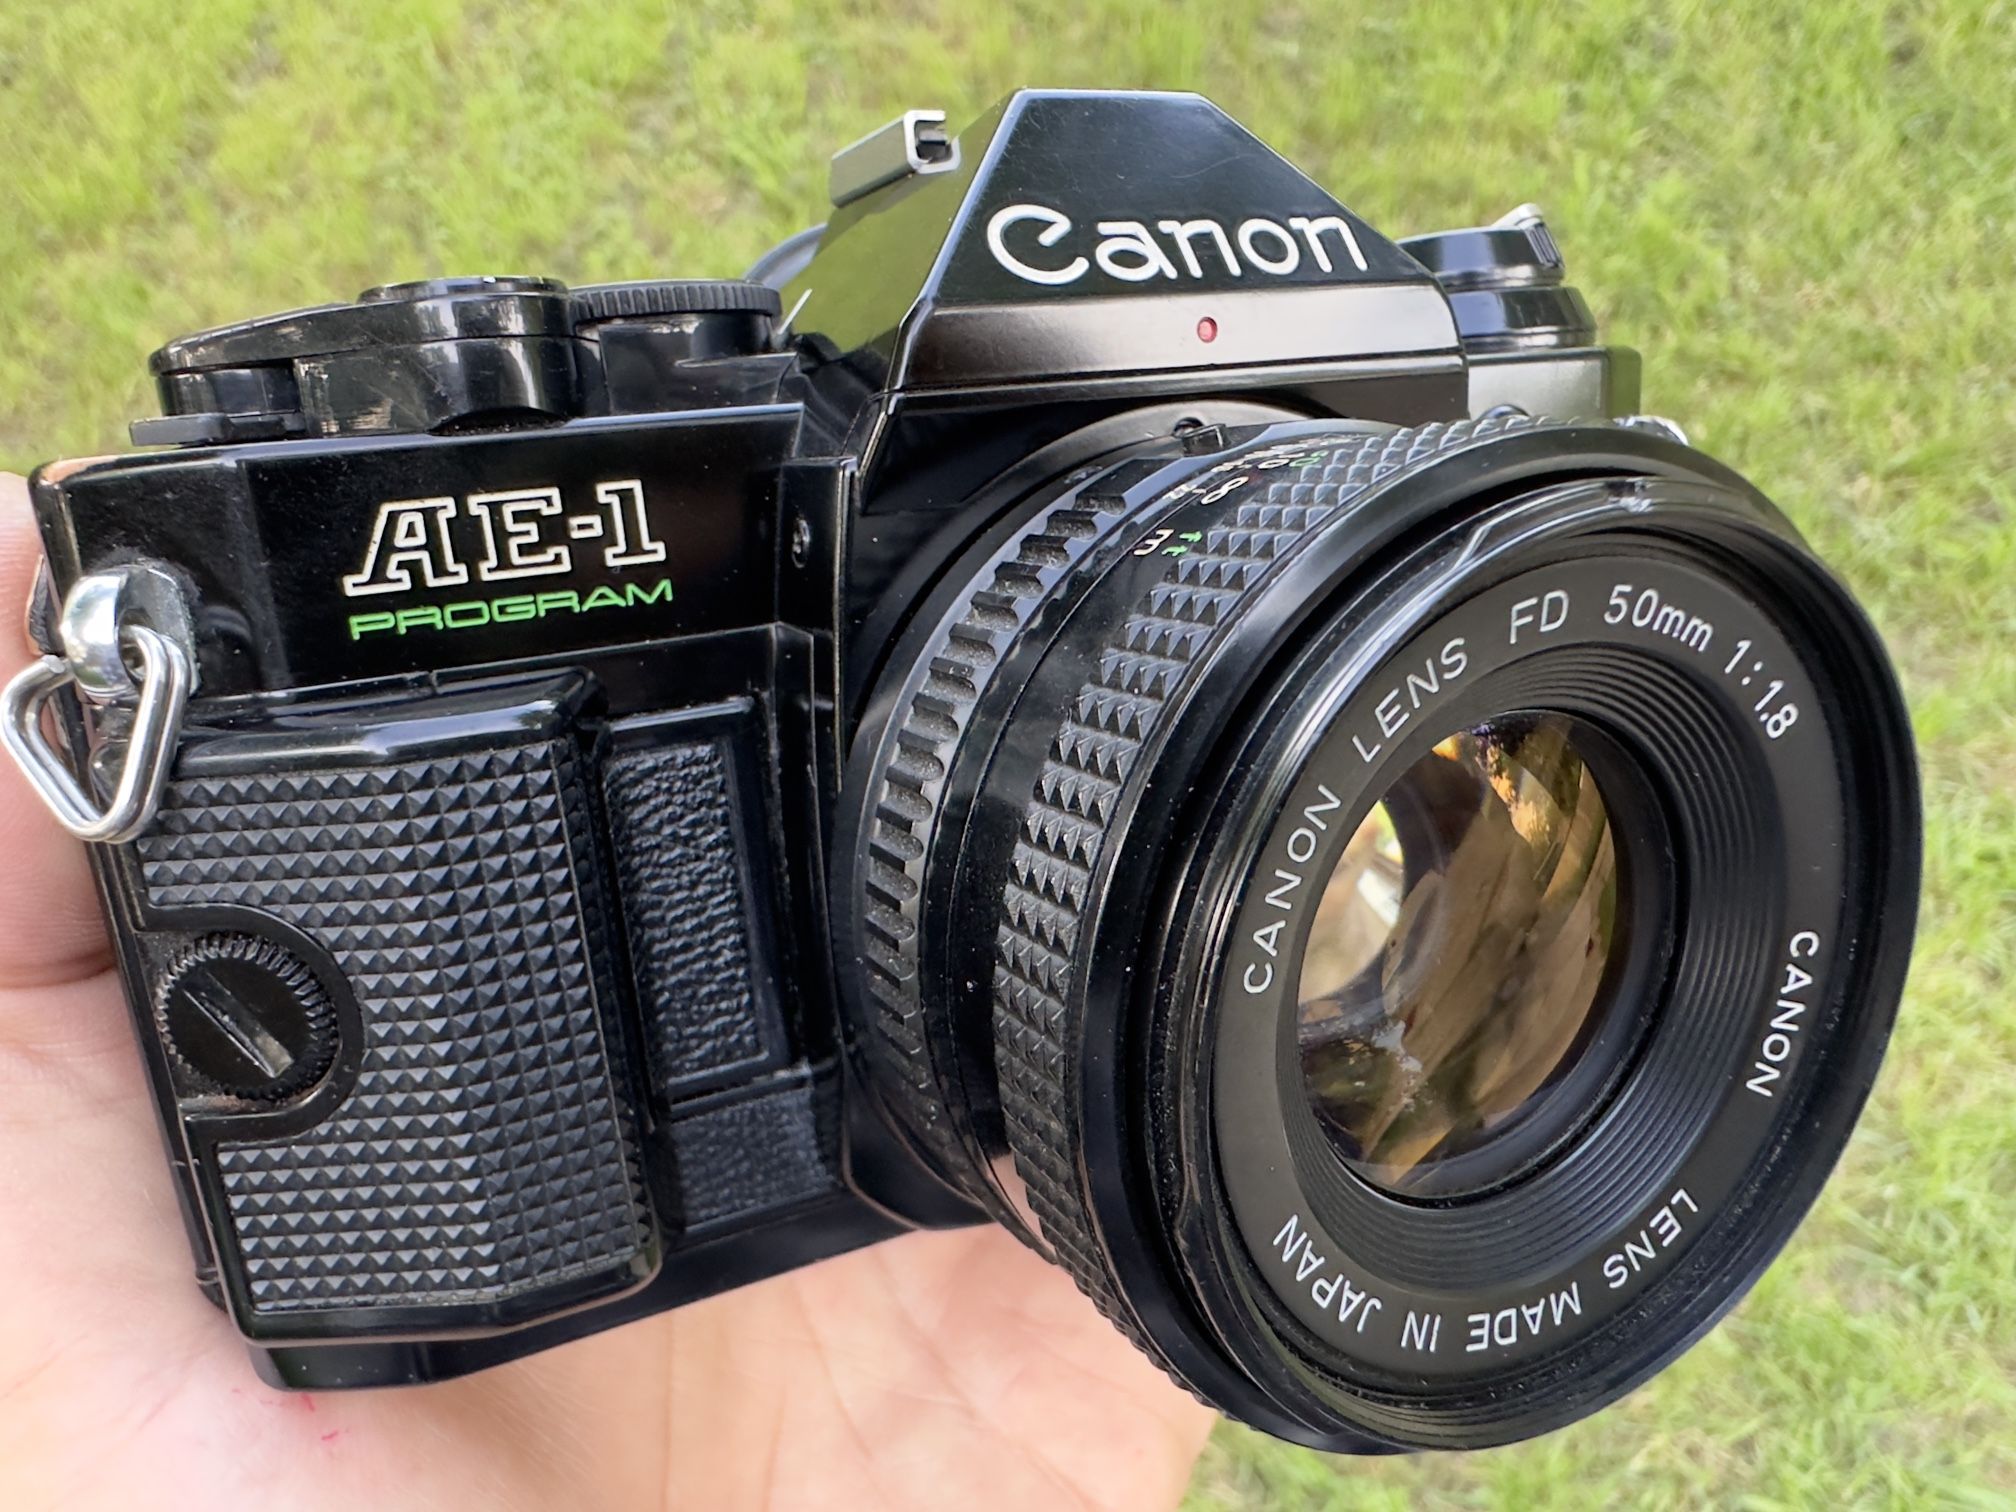 Black Canon AE-1 Program + 50mm 1.8 FD lens 35mm film camera